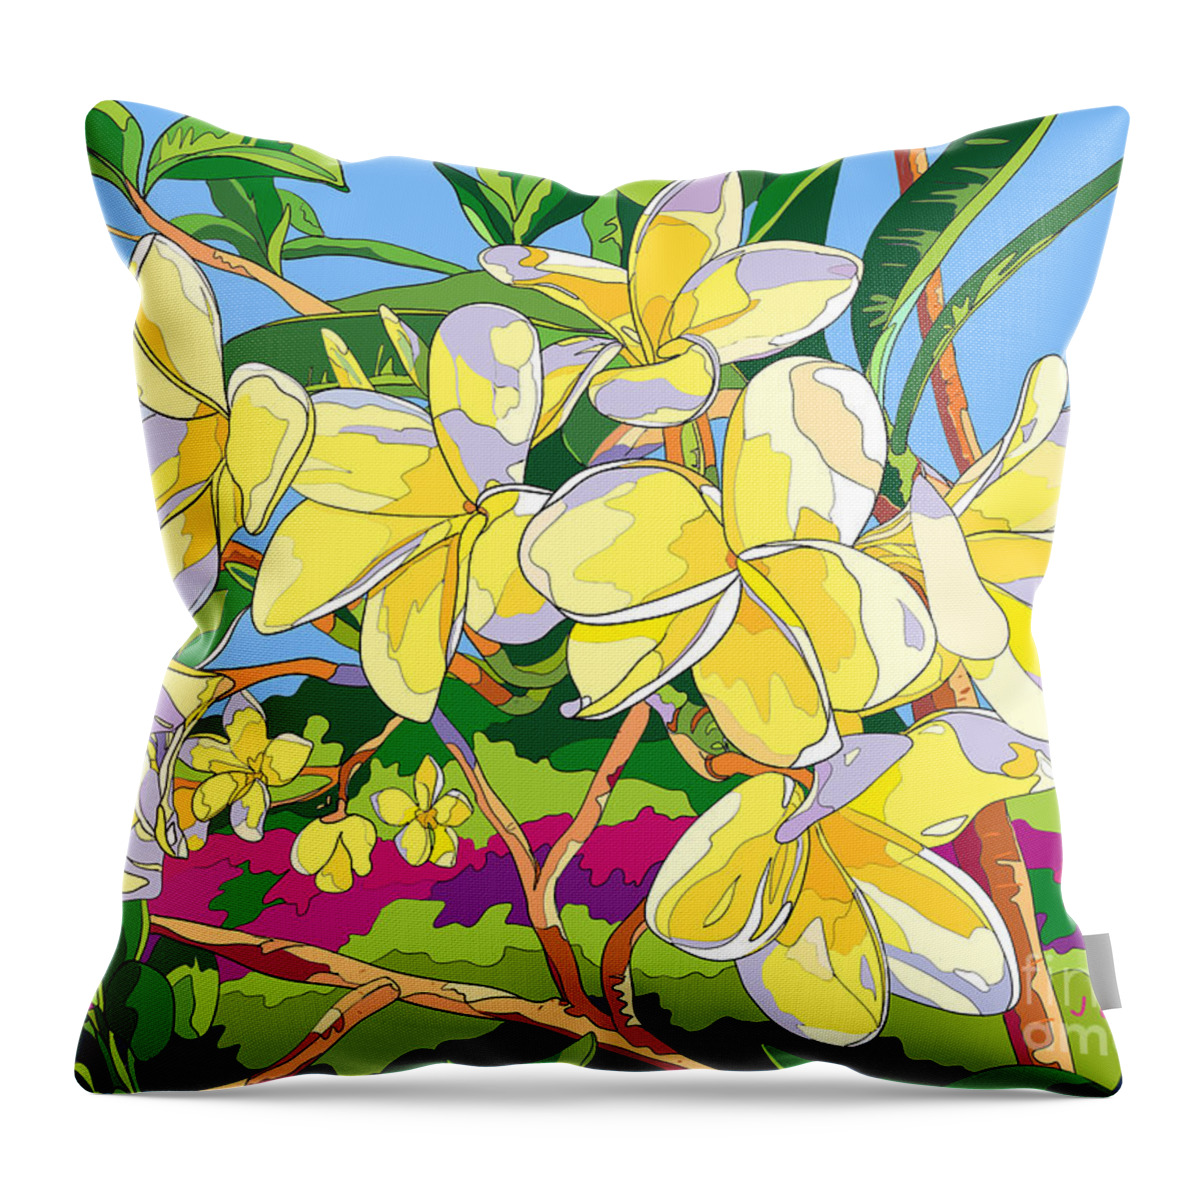 Yellow Throw Pillow featuring the digital art Yellow Frangipani by John Clark